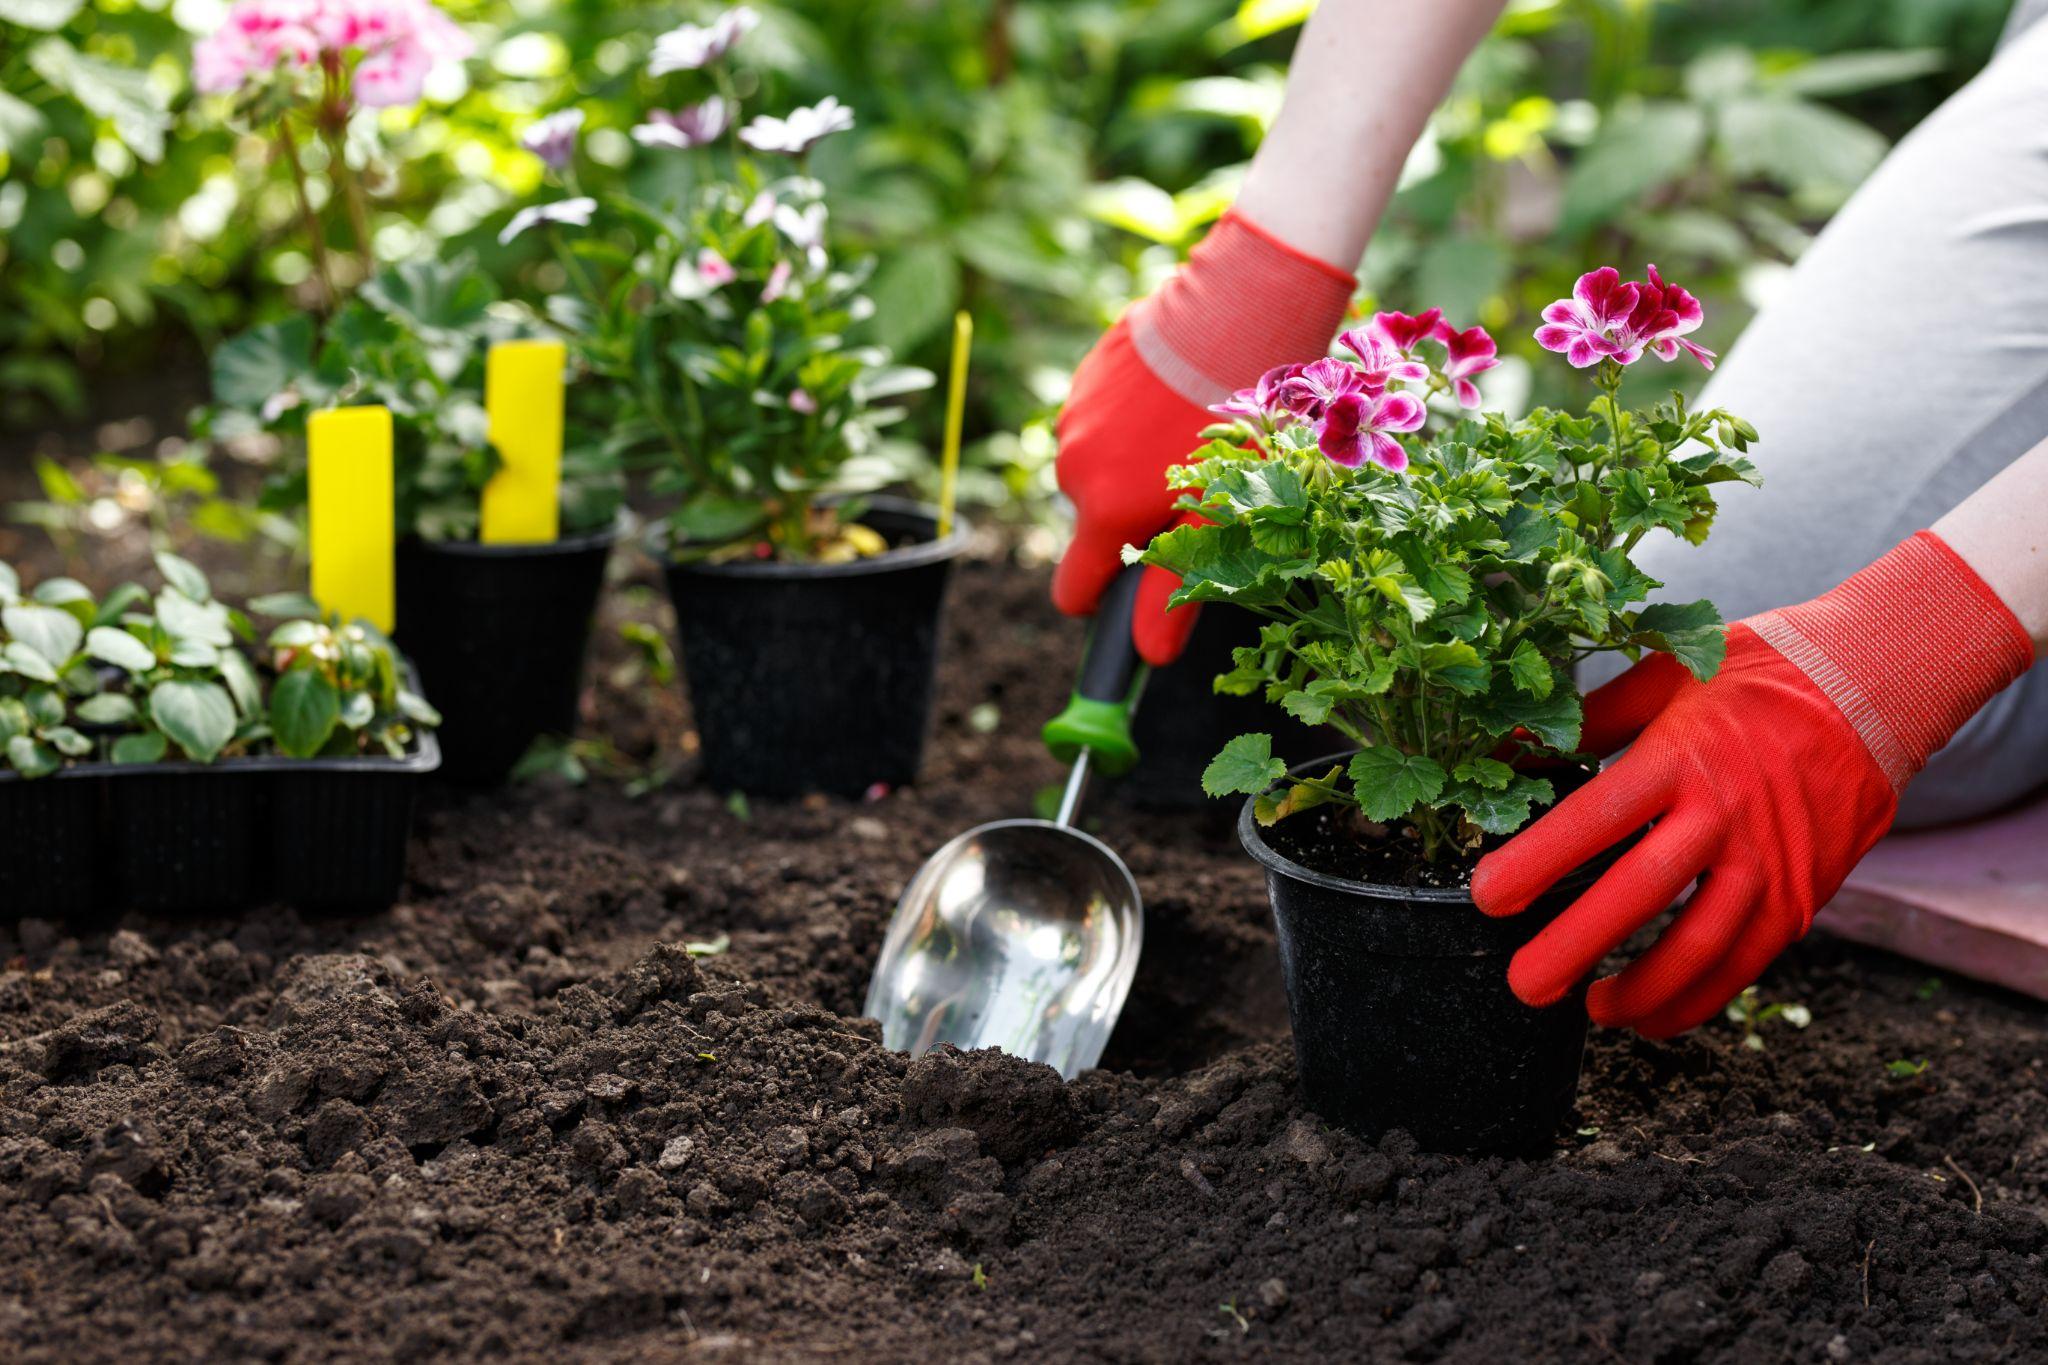 Gardener planting flowers in her garden, garden maintenance and hobby concept